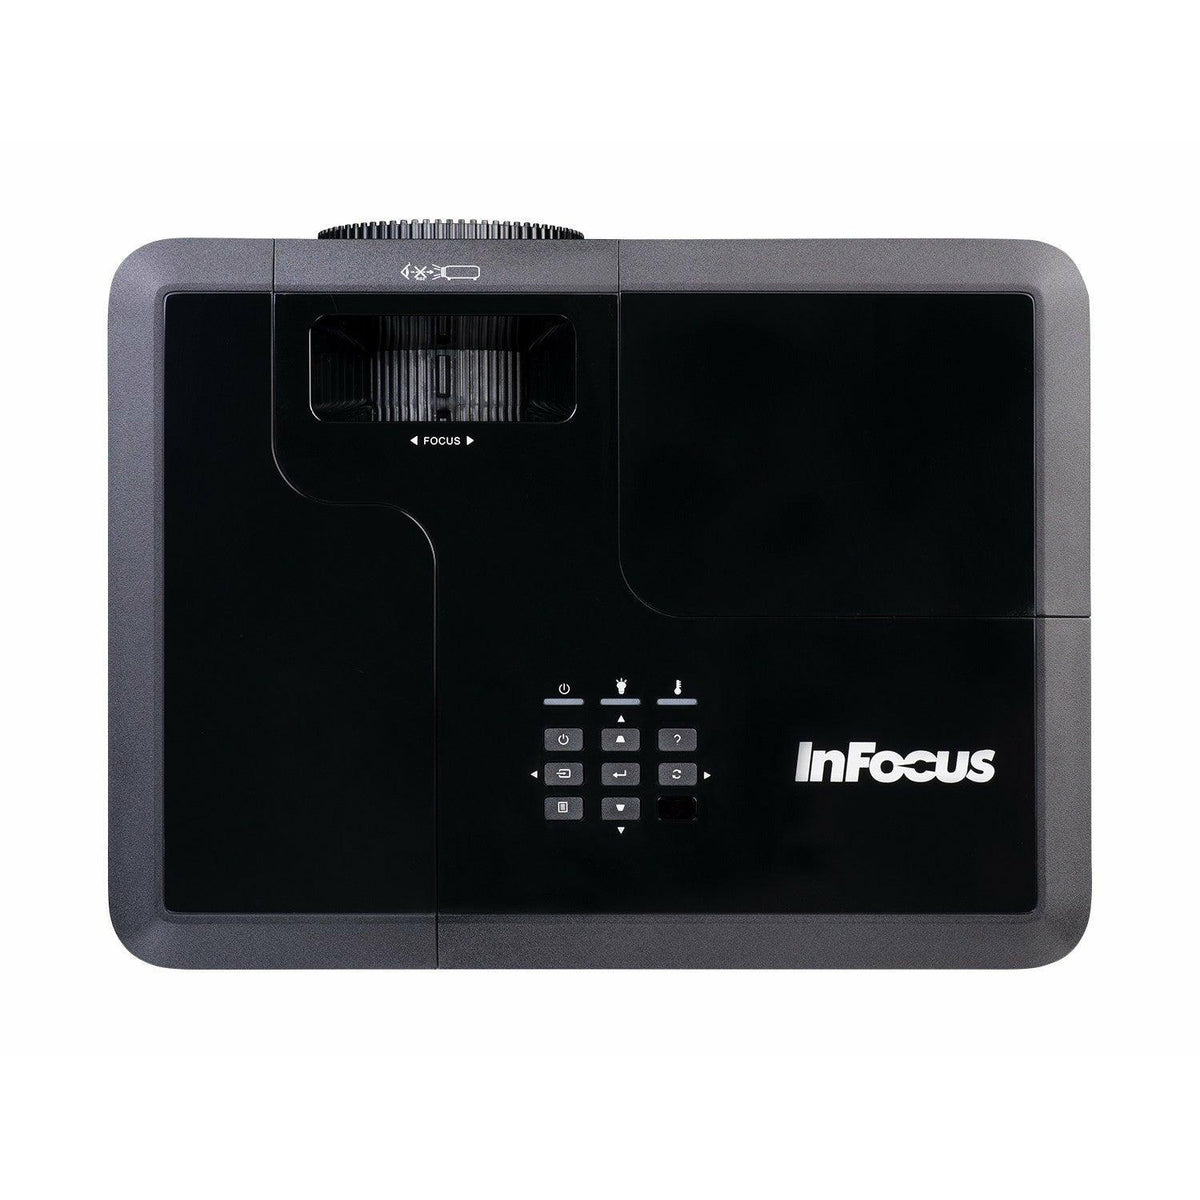 InFocus 4000 Lumens 1080p Projector - Black | IN138HD (7517065773244)